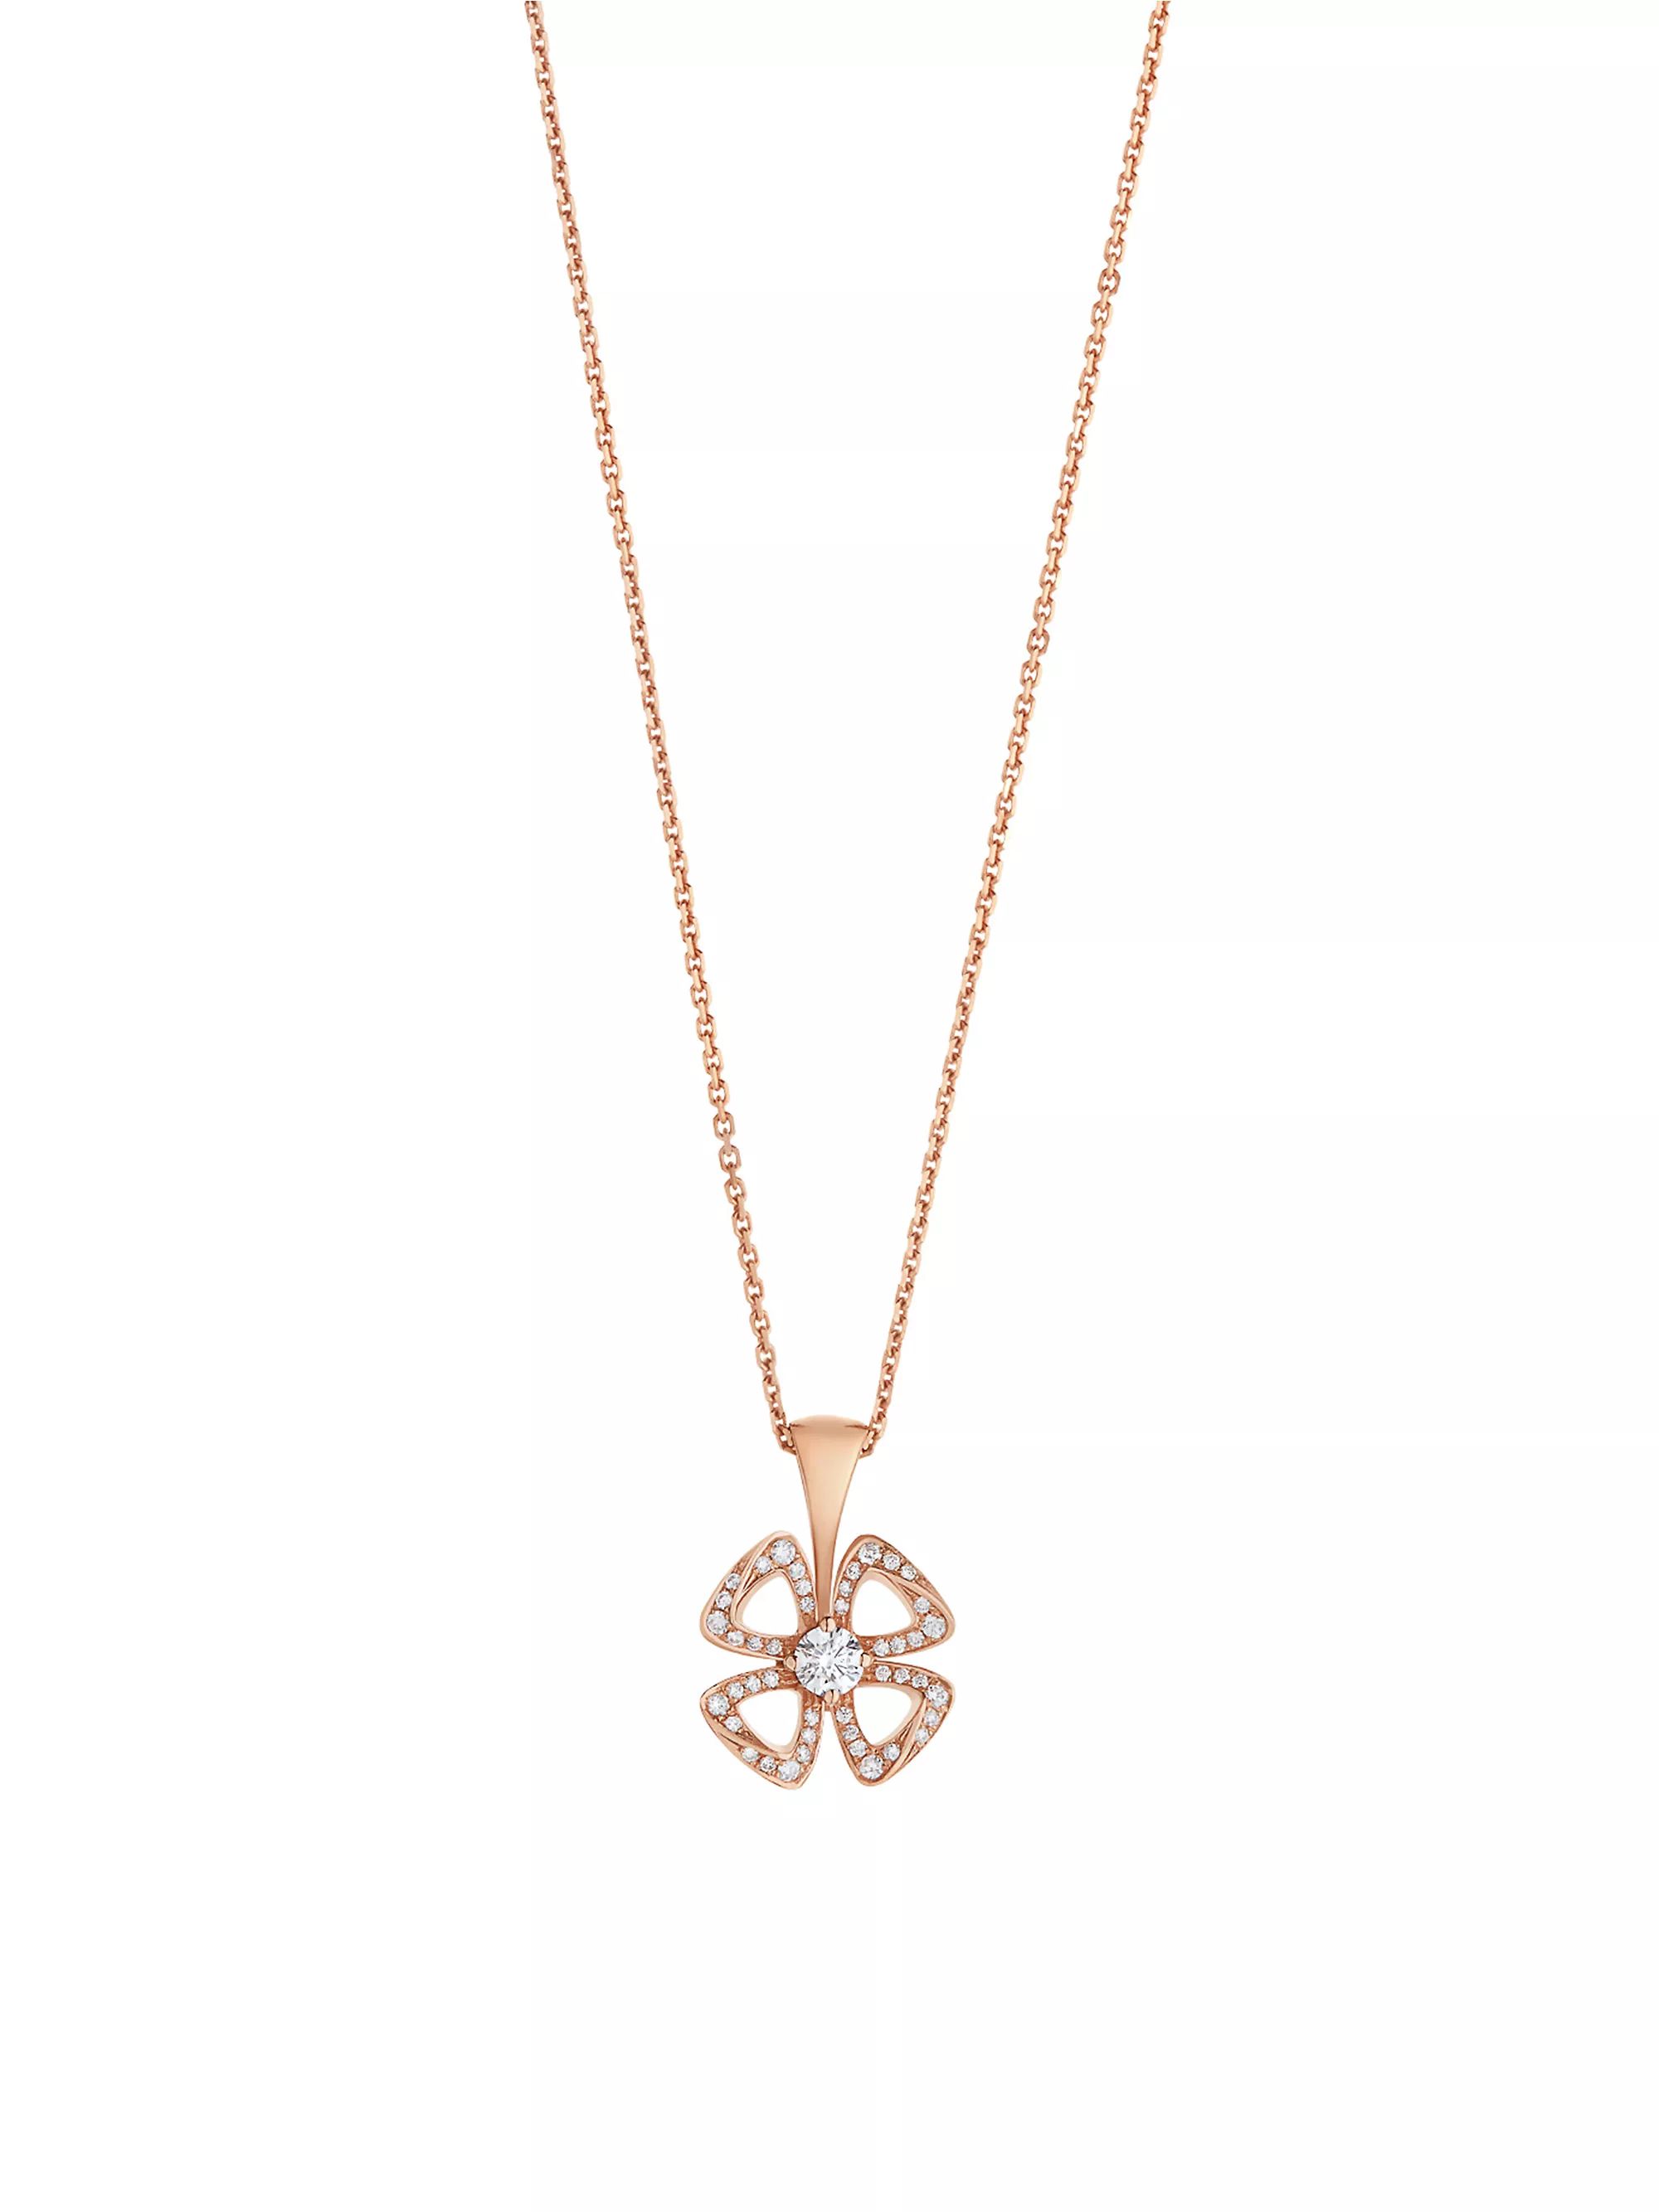 Fiorever 18K Rose Gold & 0.16 TCW Diamond Pendant Necklace | Saks Fifth Avenue